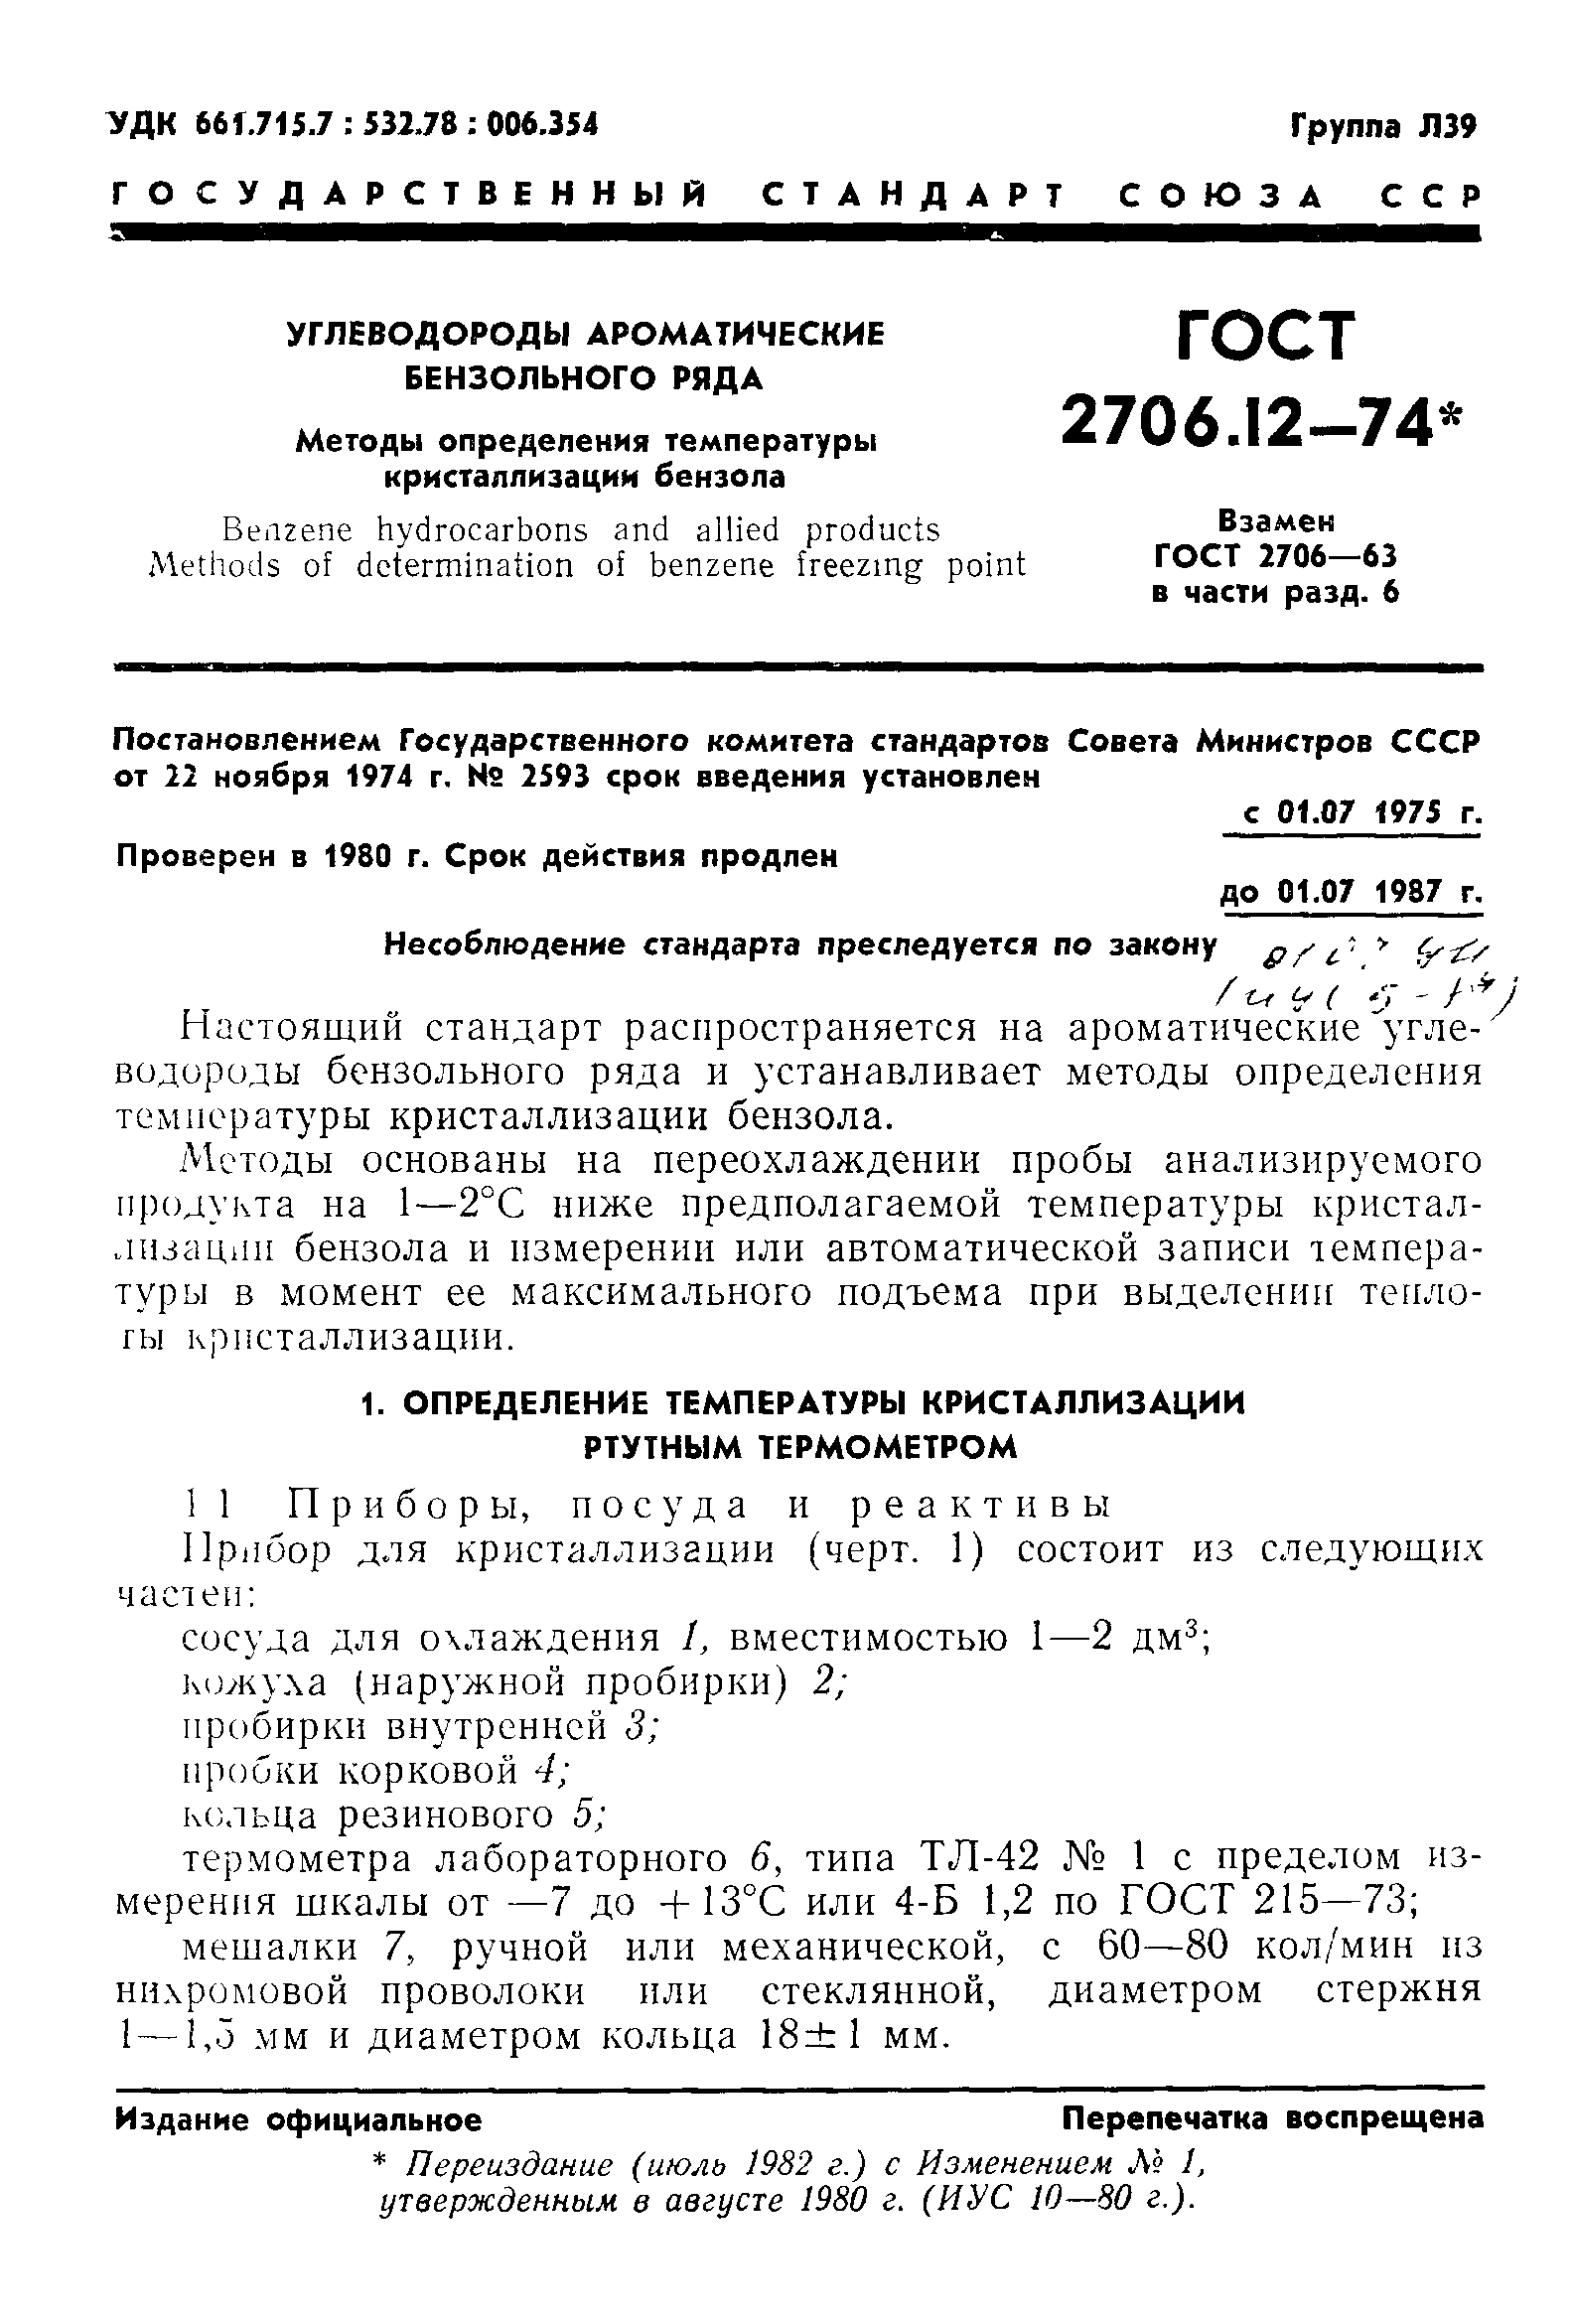 ГОСТ 2706.12-74